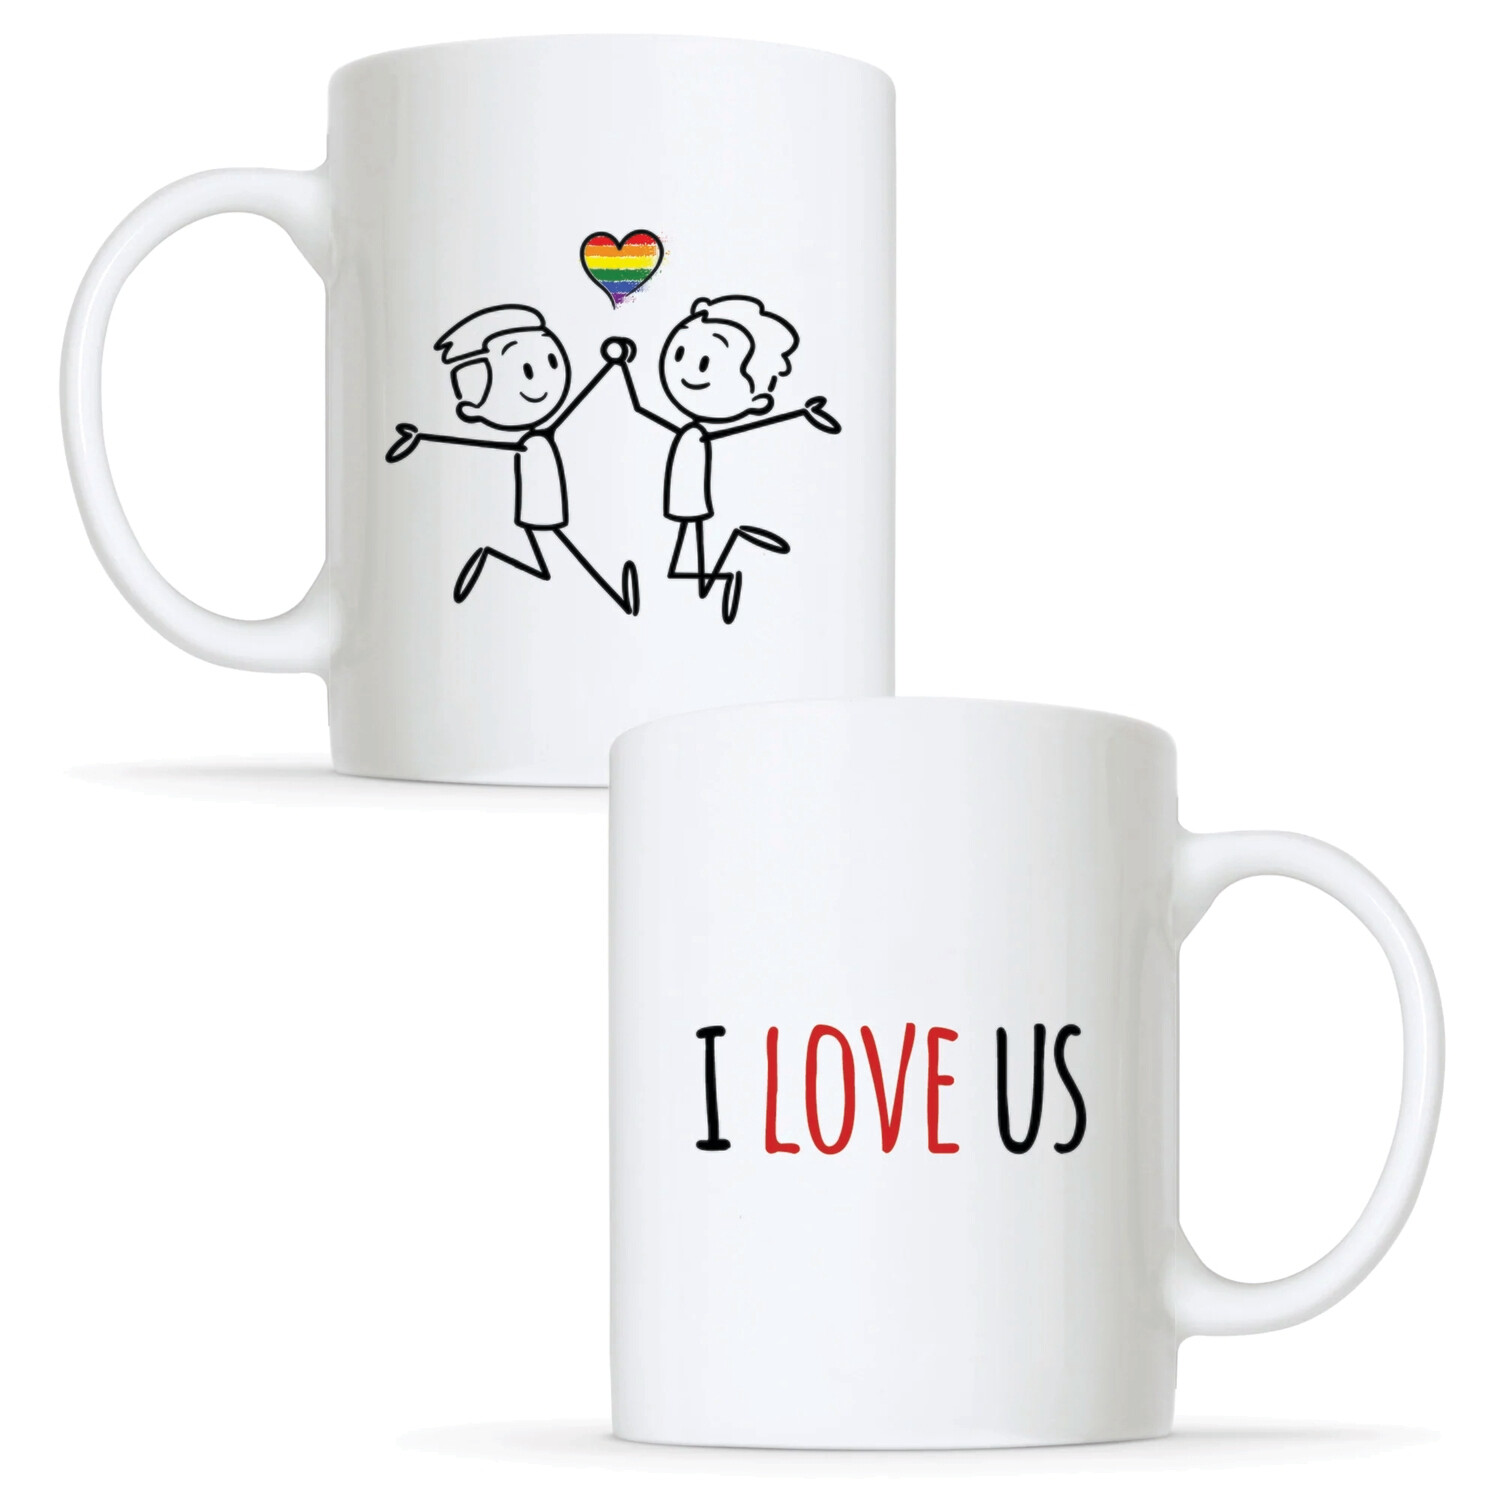 I Love Us - Gay Couple Mug Set